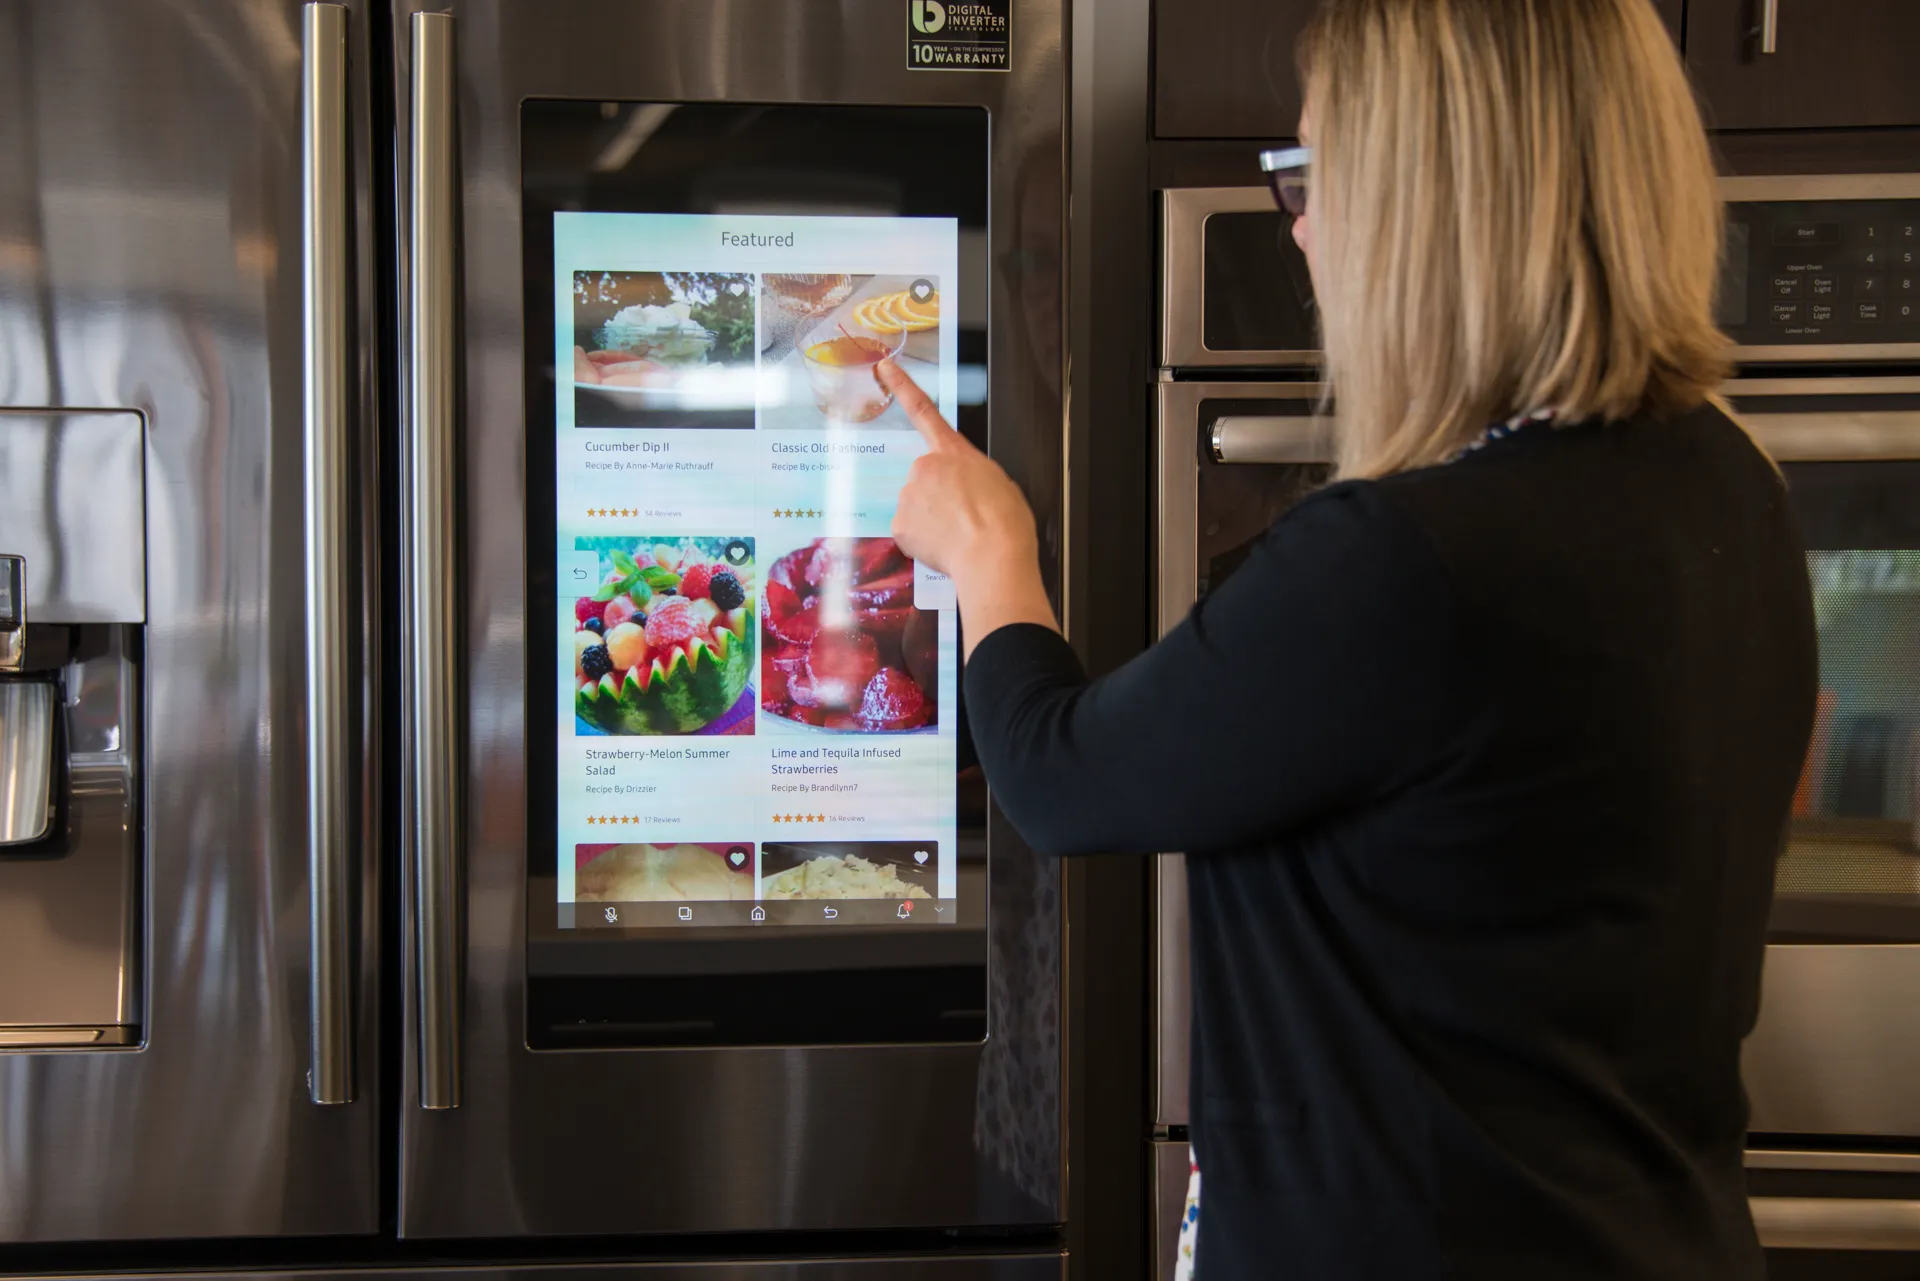 samsung family hub refrigerator